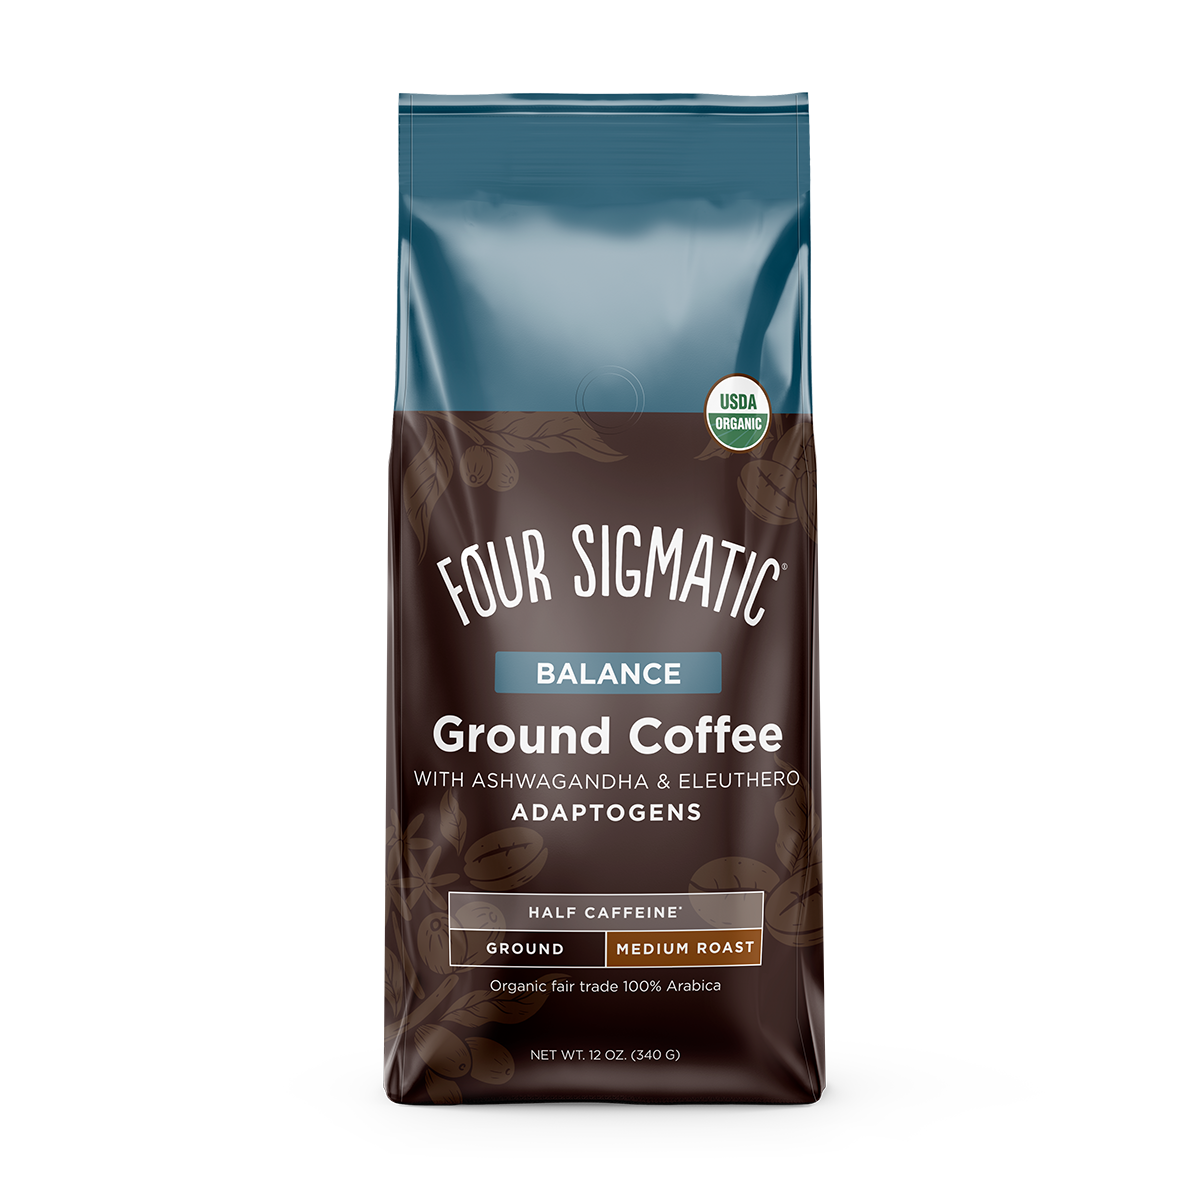 Balance Ground Coffee with Ashwagandha & Eleuthero 8 units per case 12.0 oz